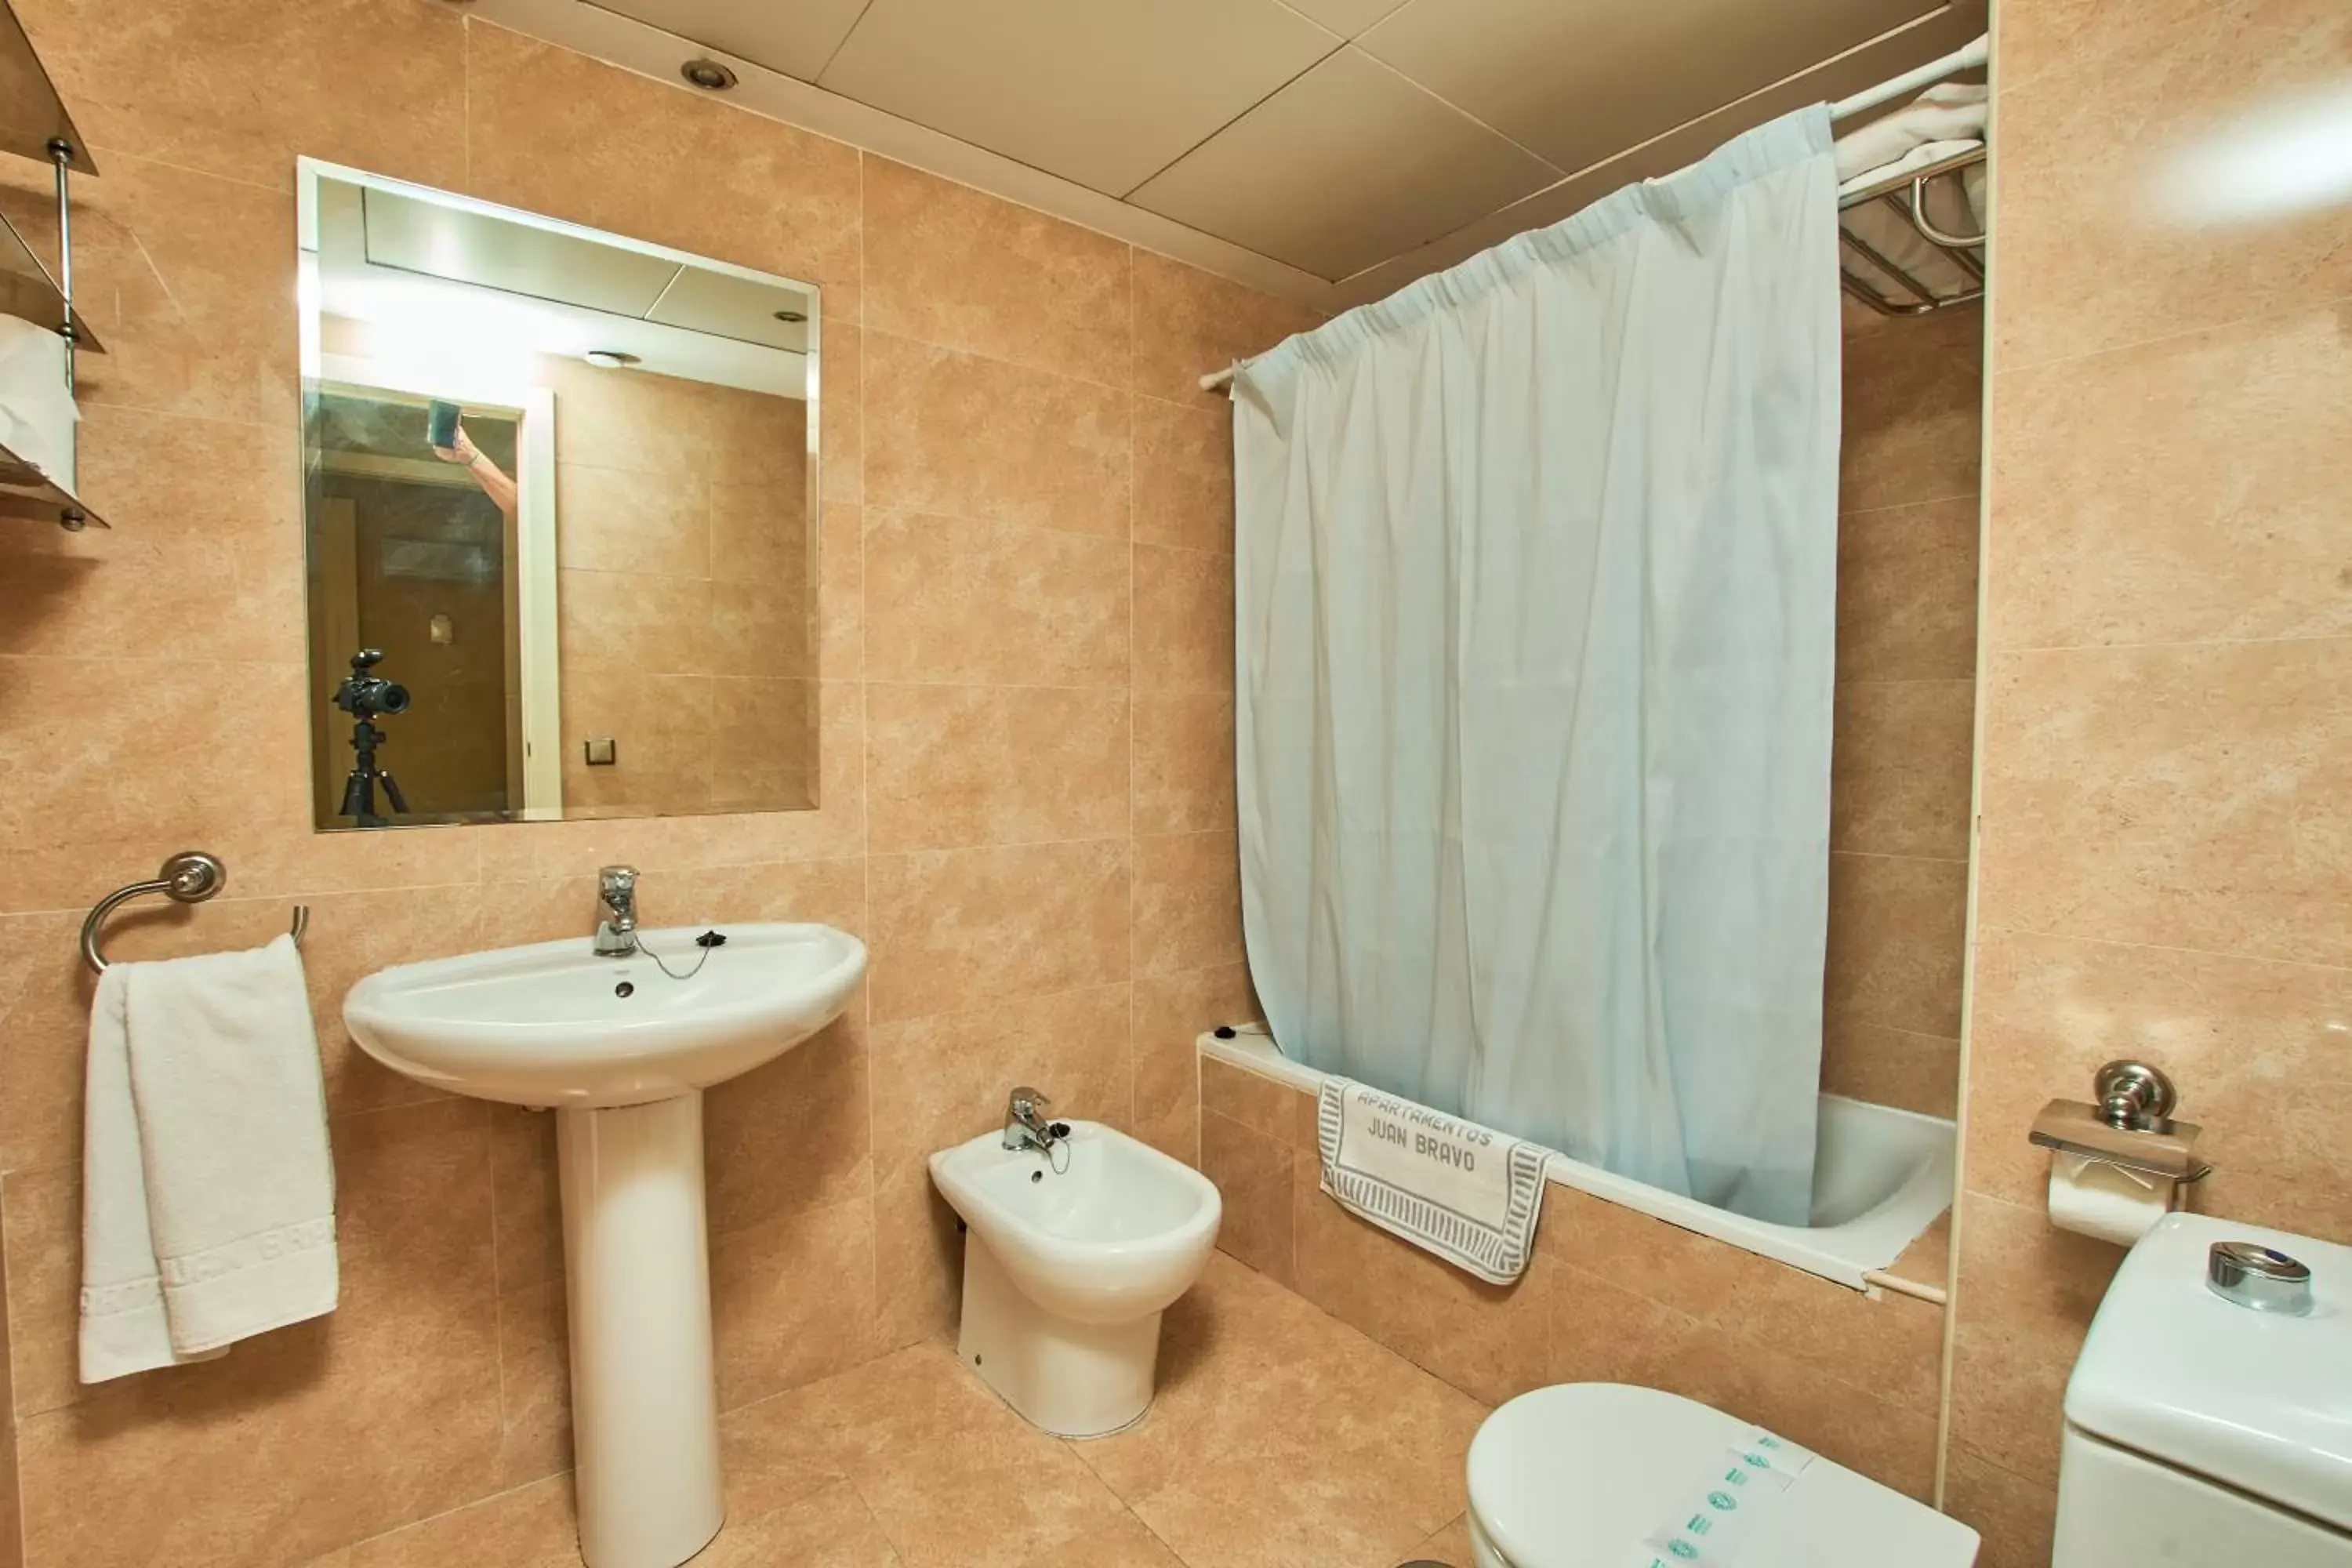 Bathroom in Apartamentos Juan Bravo